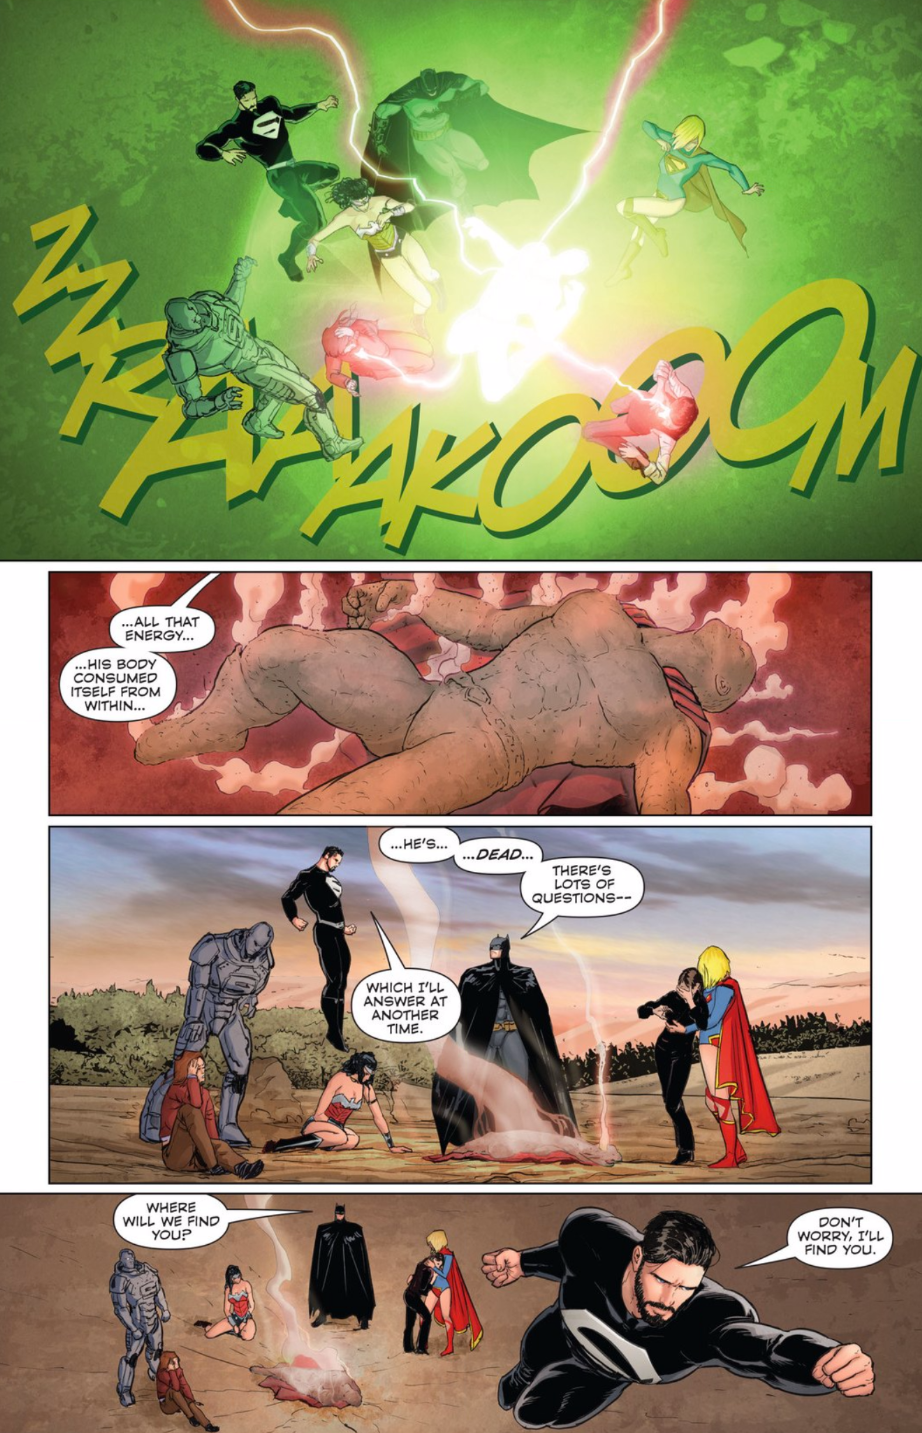 43 - [DC Comics] Superman: Discusión General - Página 10 Pmxp5wkhym7m6rtysmbn